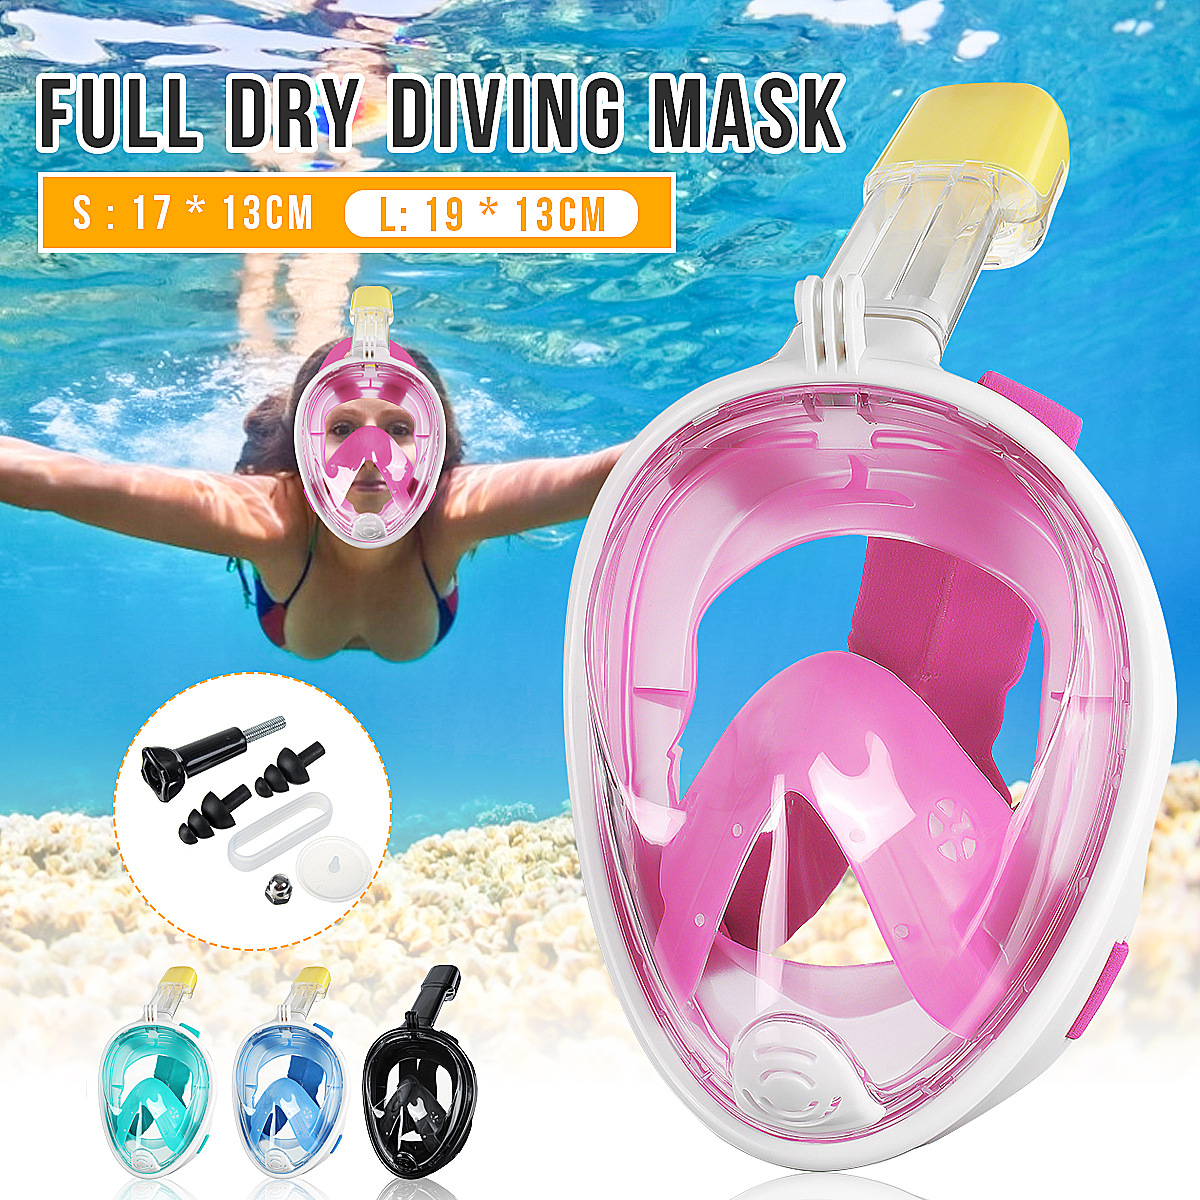 Full-Face-Snorkel-Mask-180deg-Panoramic-Viewing-Anti-Fog-Anti-Leak-Diving-Mask-Outdoor-Water-Sport-1700406-1